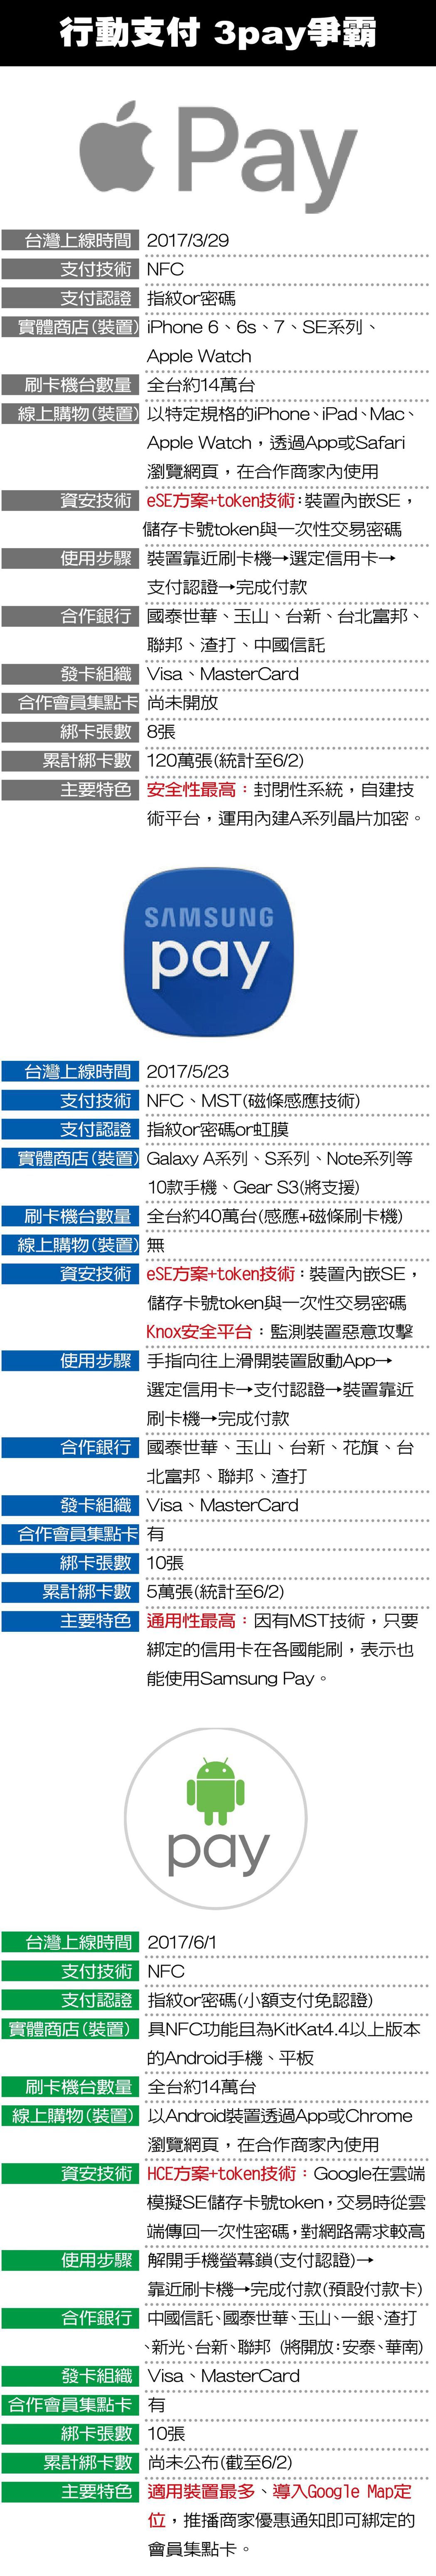 資料來源：三星、蘋果、android官網、Money101.com.tw、KPM...